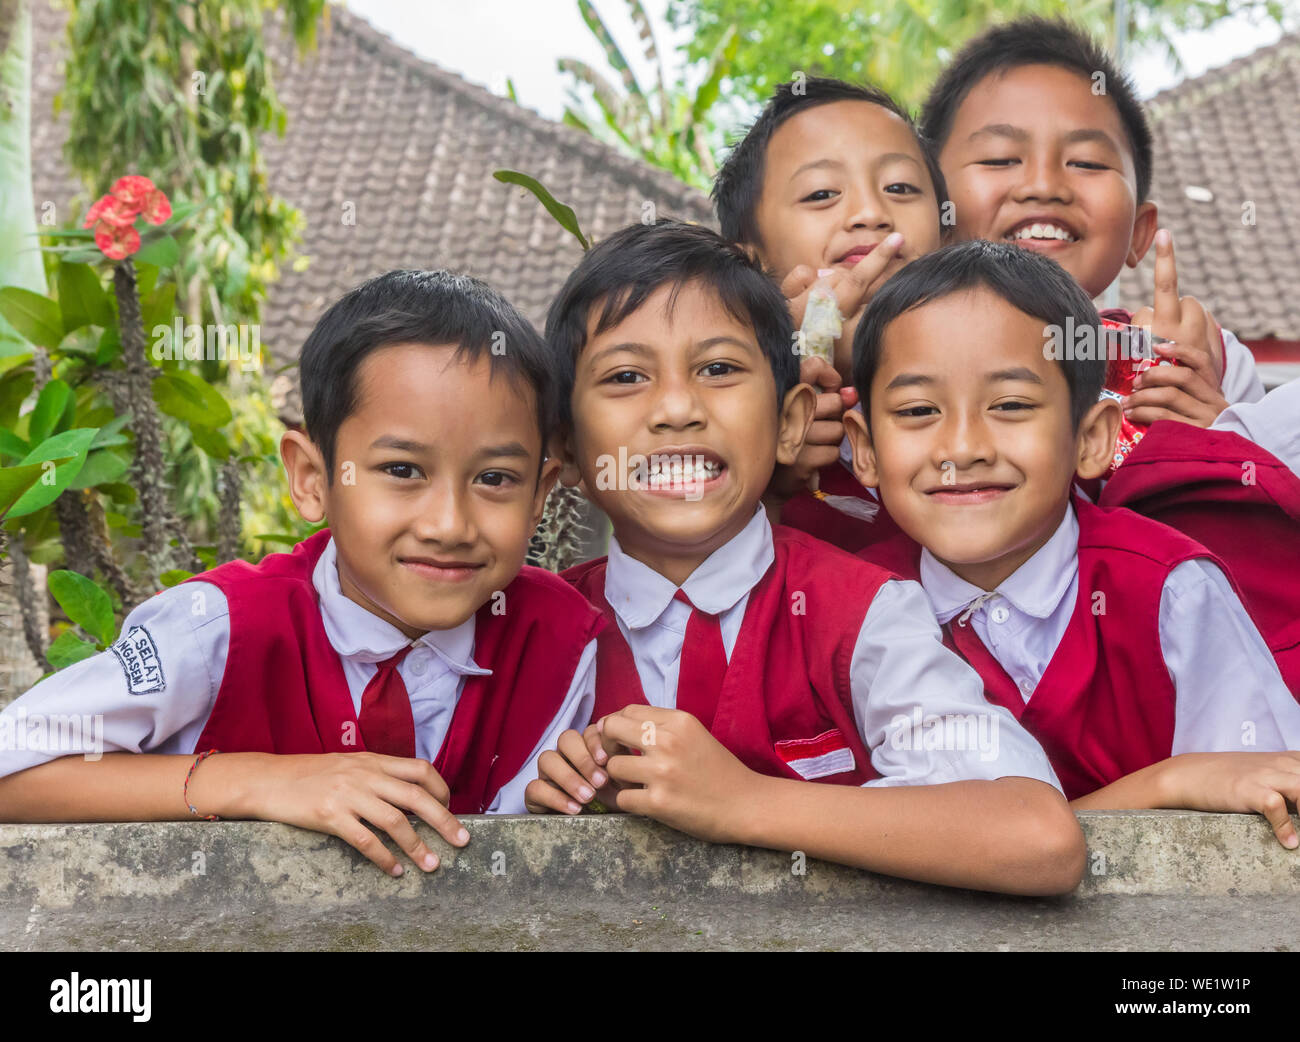 Indonesische Schuljungen in Uniform posiert vor Ihrer Schule Stockfoto